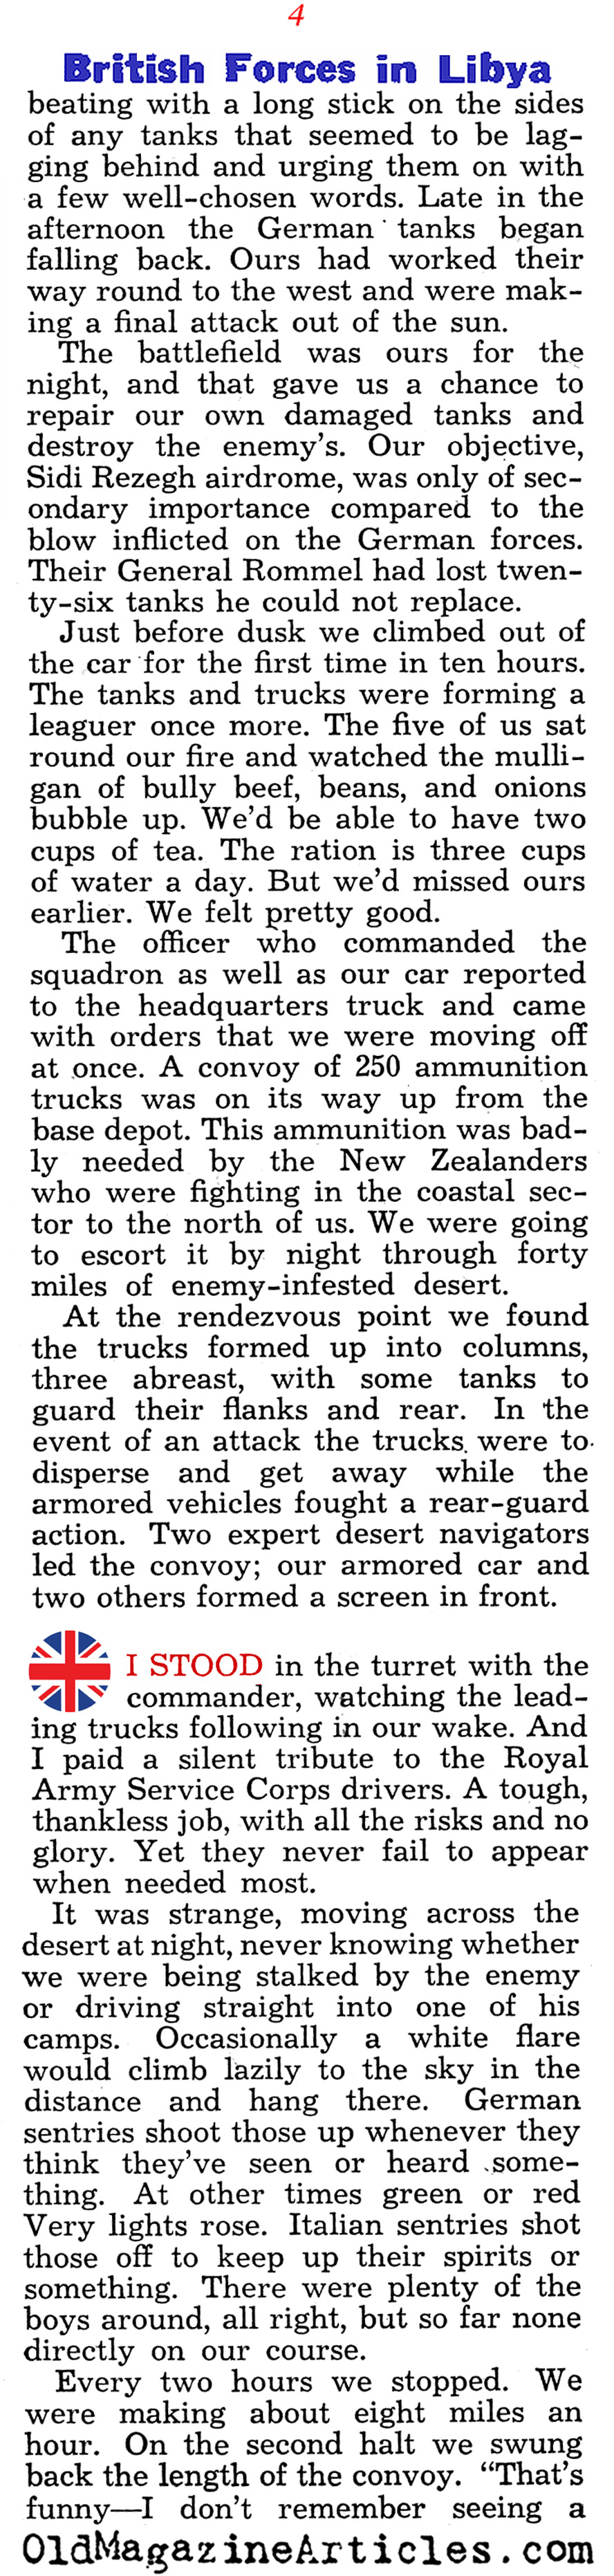 Clash of the Titans in Libya (Liberty Magazine, 1942)